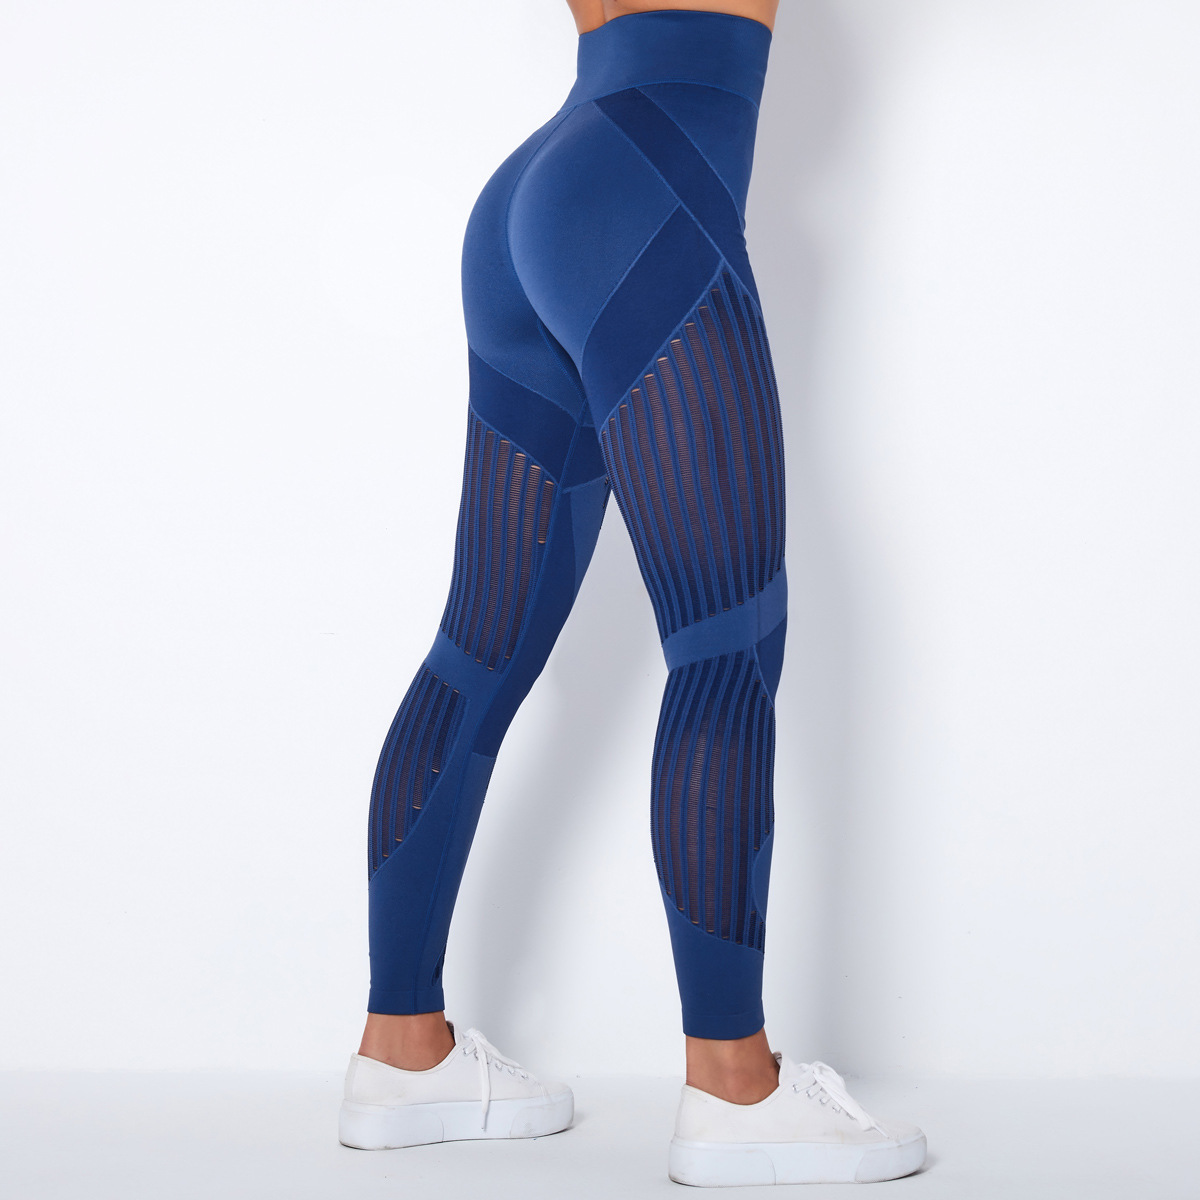 seamless knit quick-drying hollow high waist hip tight sports pants  NSLX9000